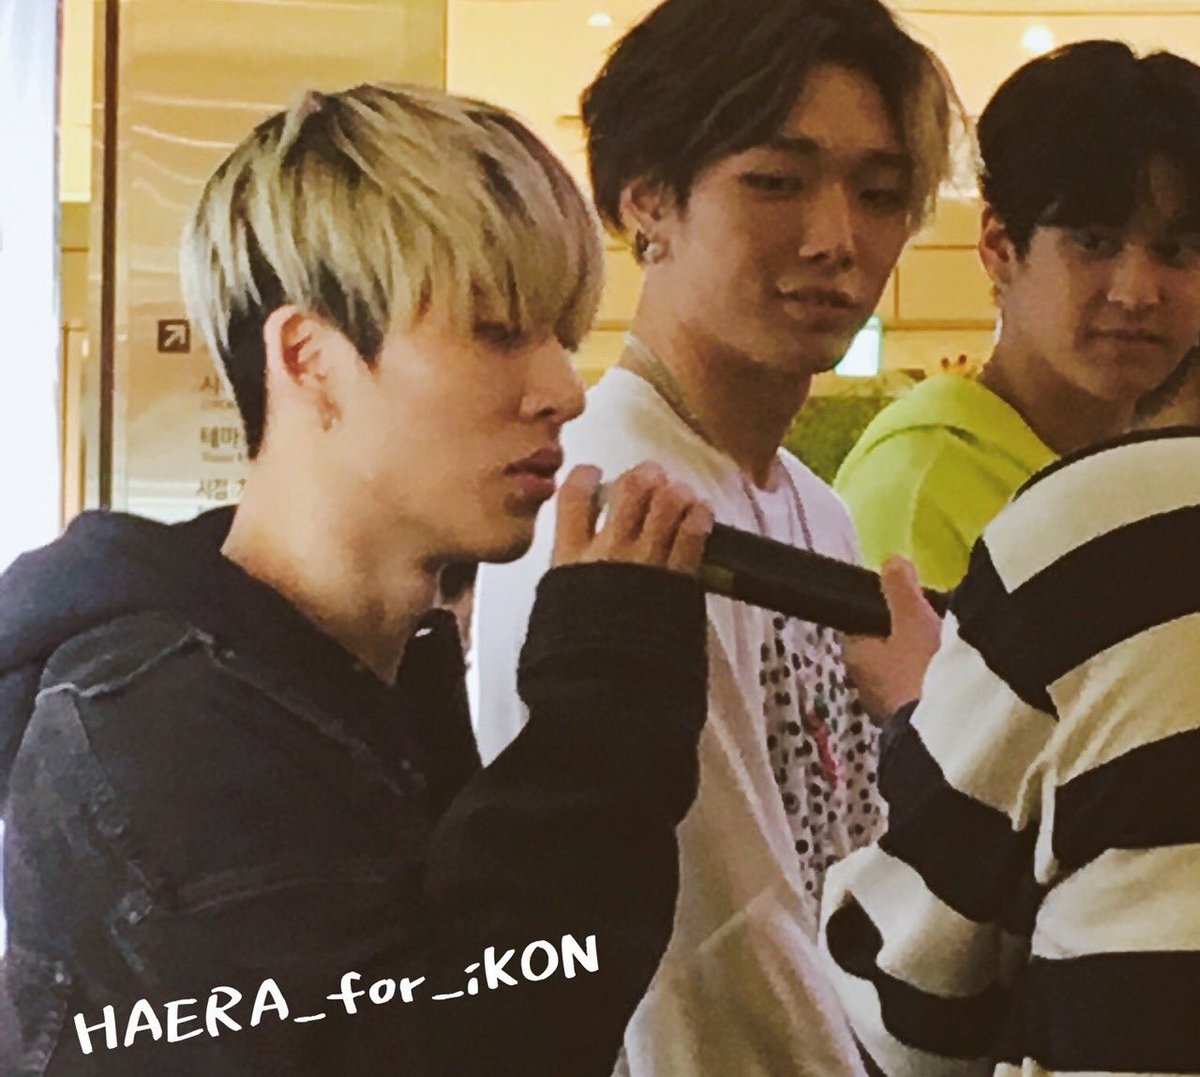 the way Jiwon looks at Hanbin 